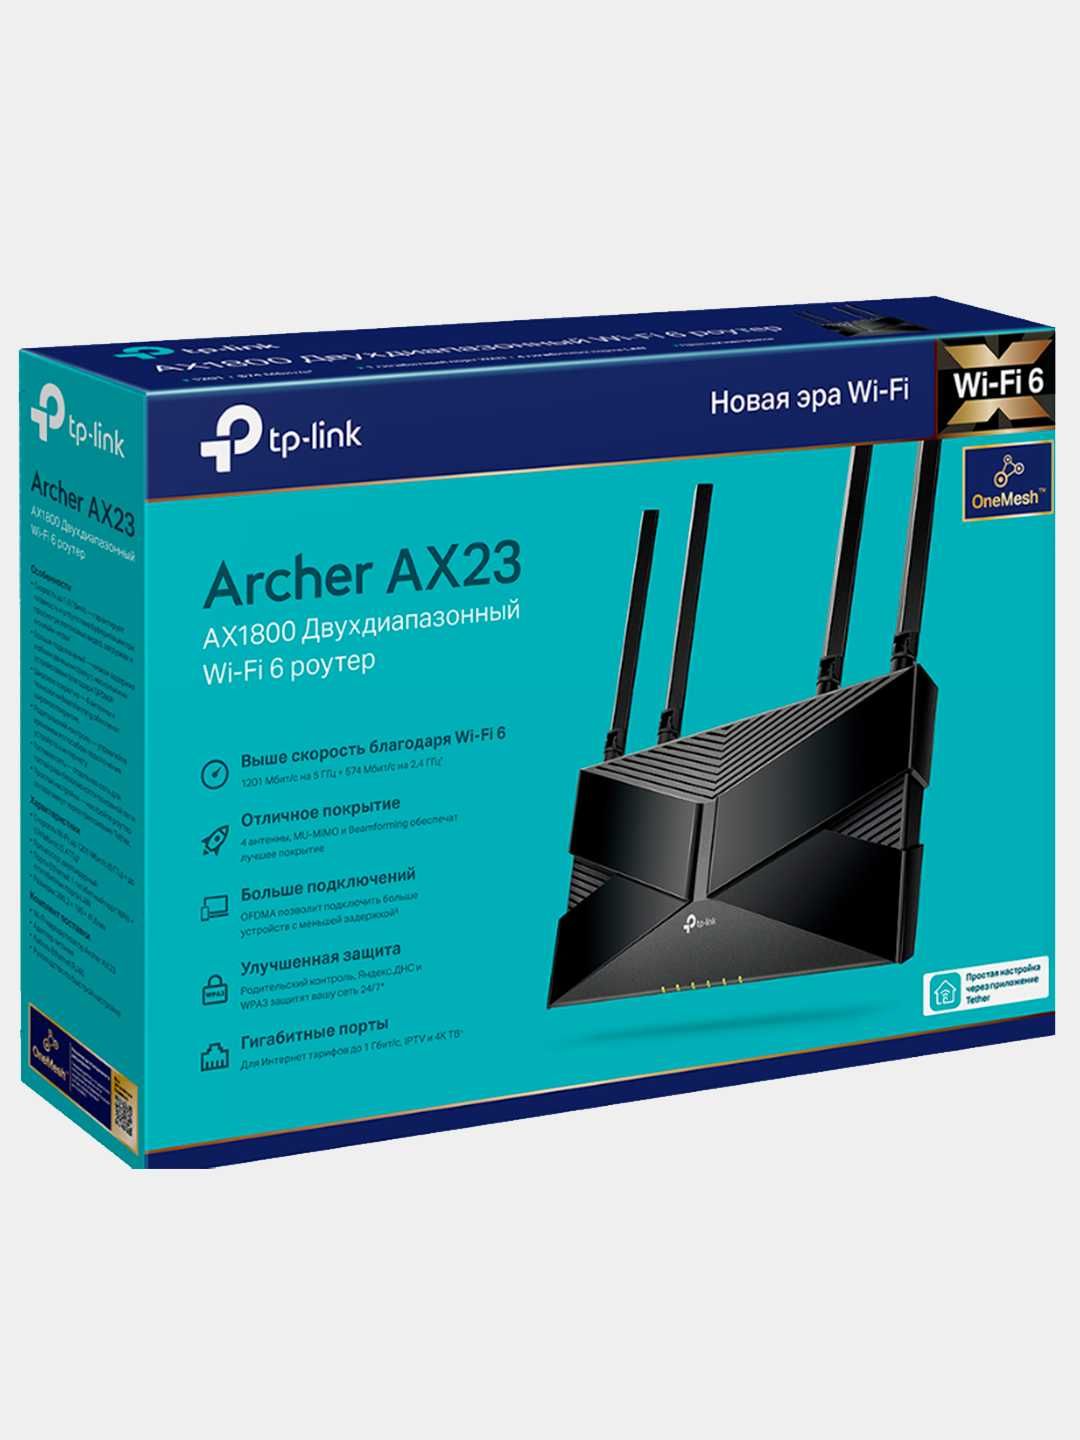 Роутер tp-link Archer AX23 Wi-Fi 6